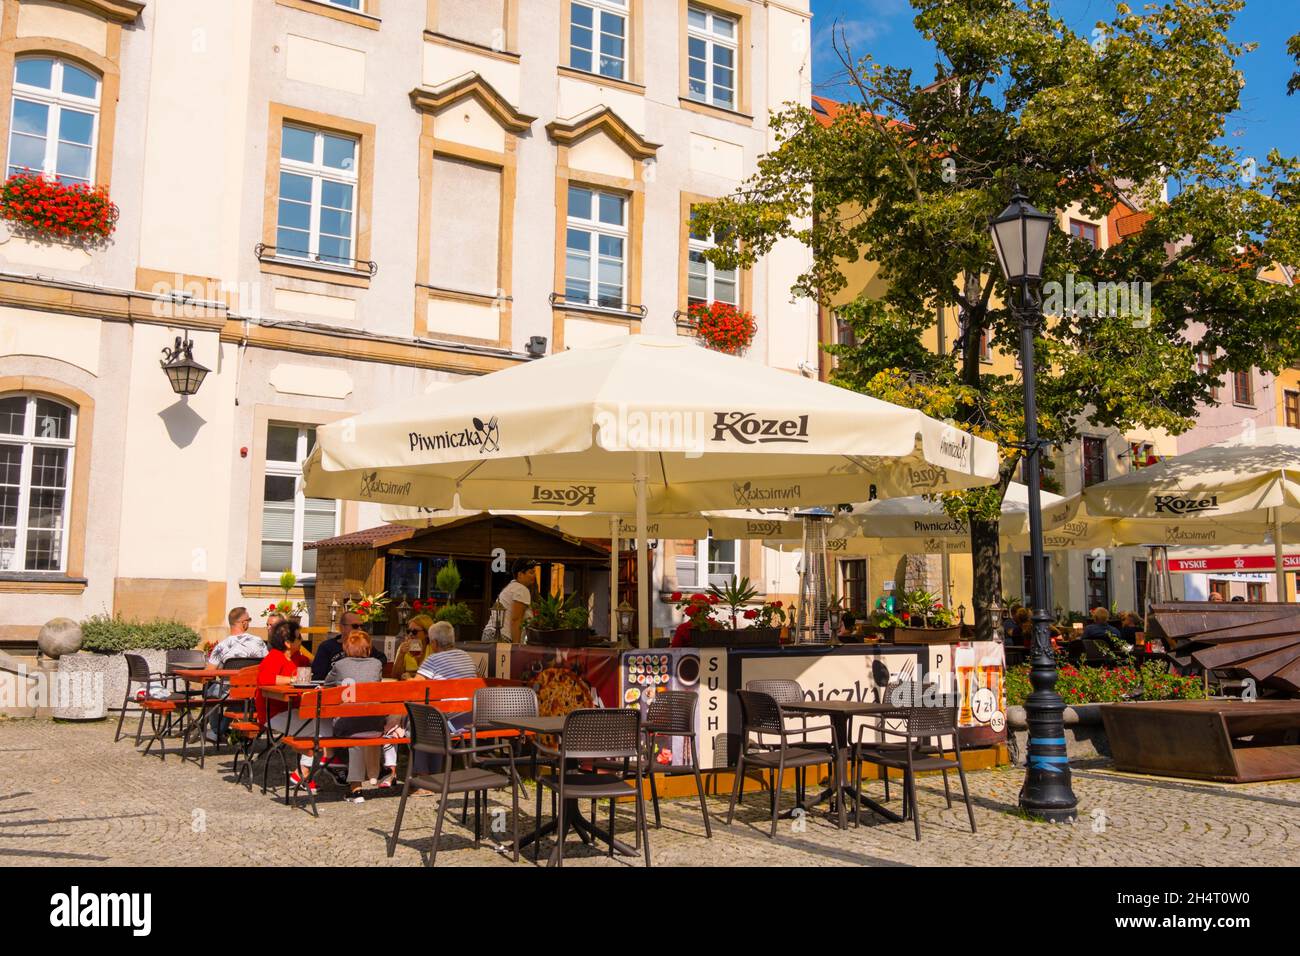 Bar y restaurante terraza, frente al ayuntamiento, Rynek Jeleniogórski, plaza principal, Jelenia Gora, Polonia Foto de stock